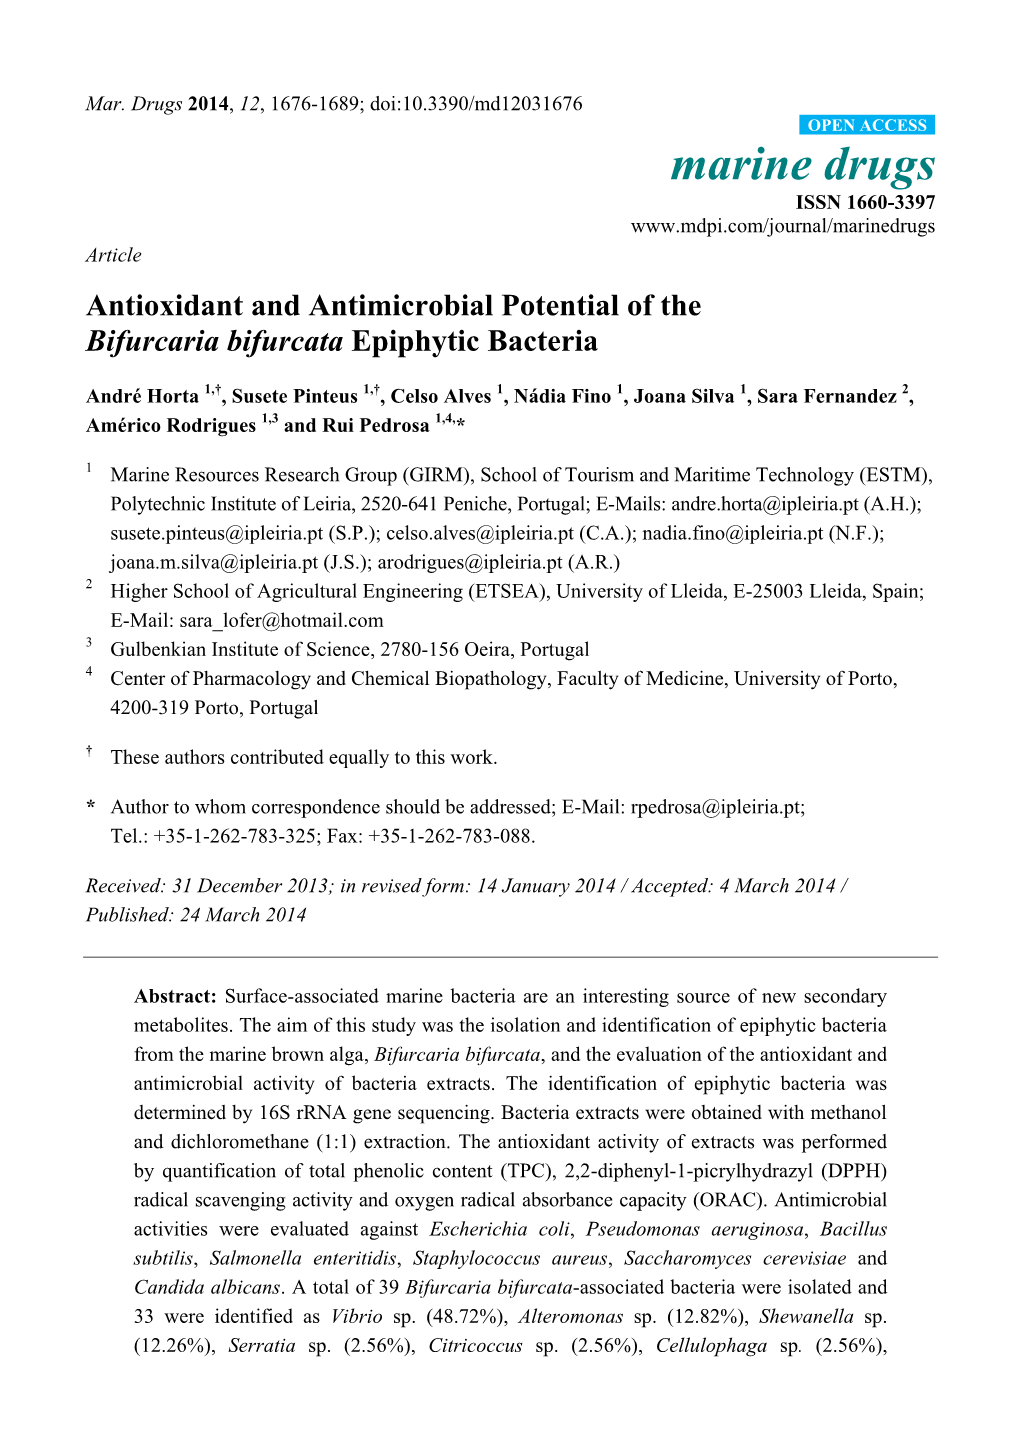 Antioxidant and Antimicrobial Potential of the Bifurcaria Bifurcata Epiphytic Bacteria